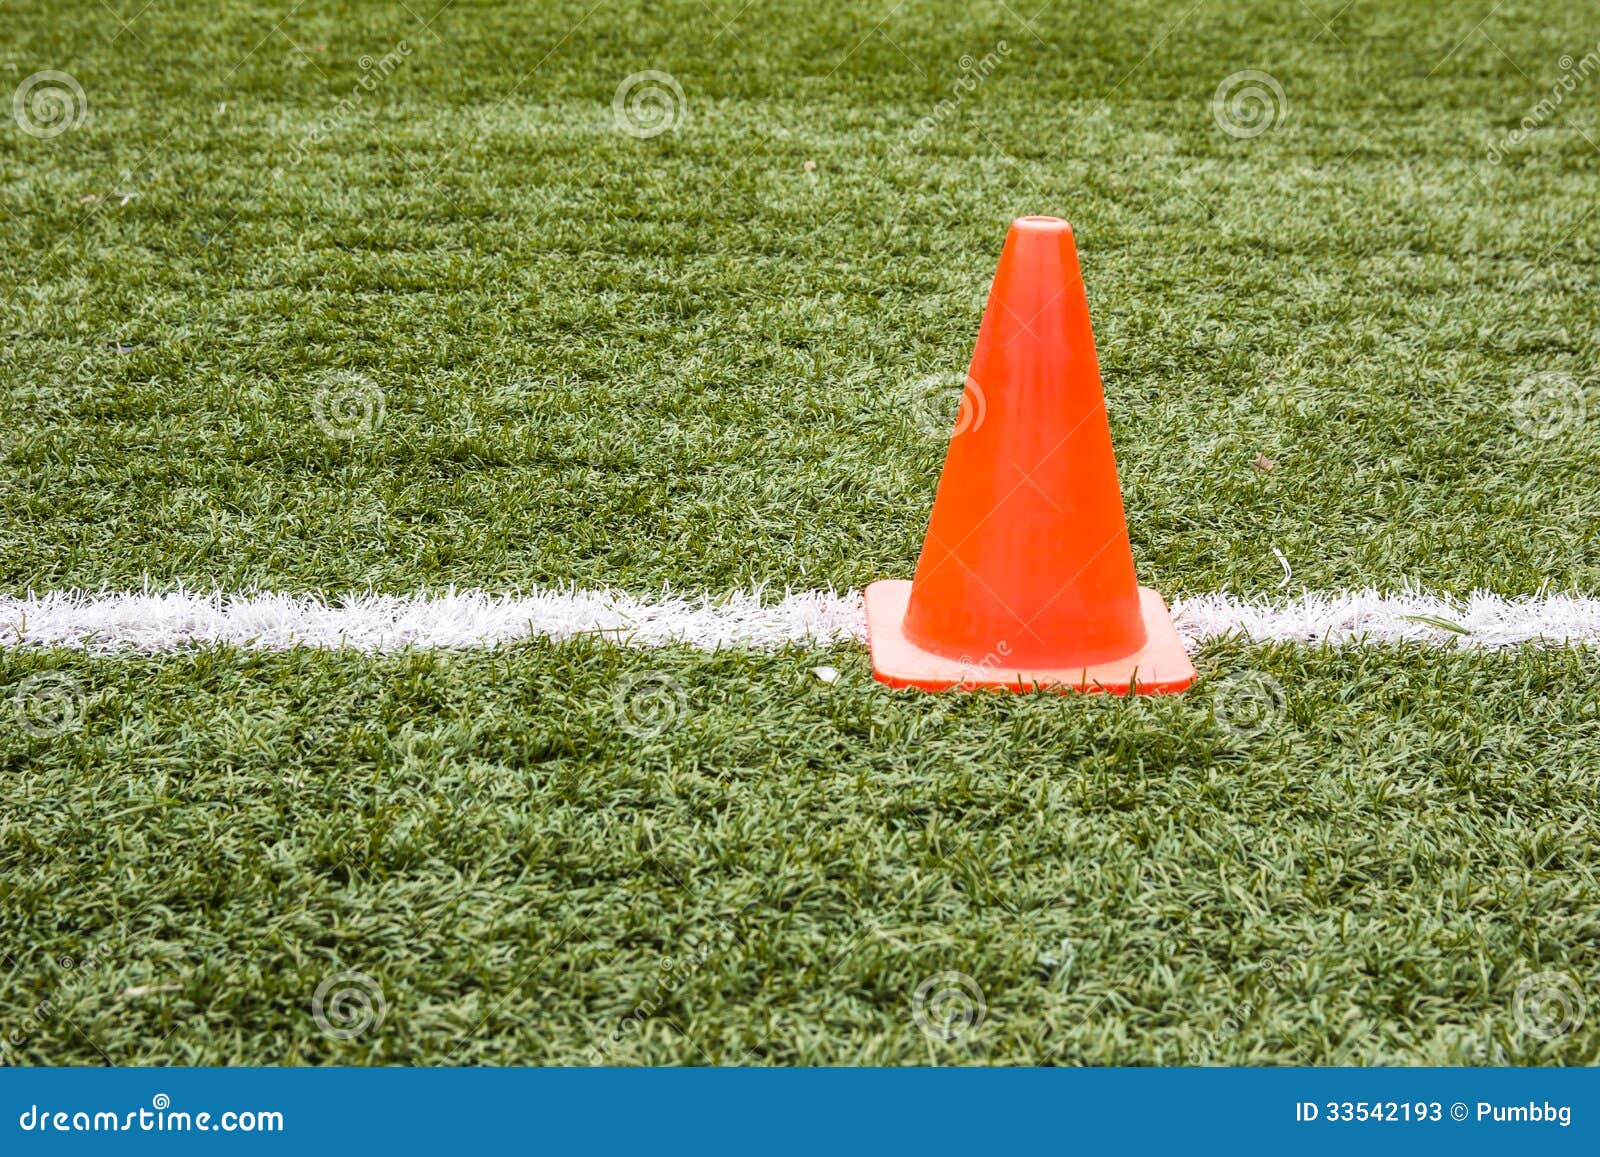 artificial-grass-traffic-cones-football-